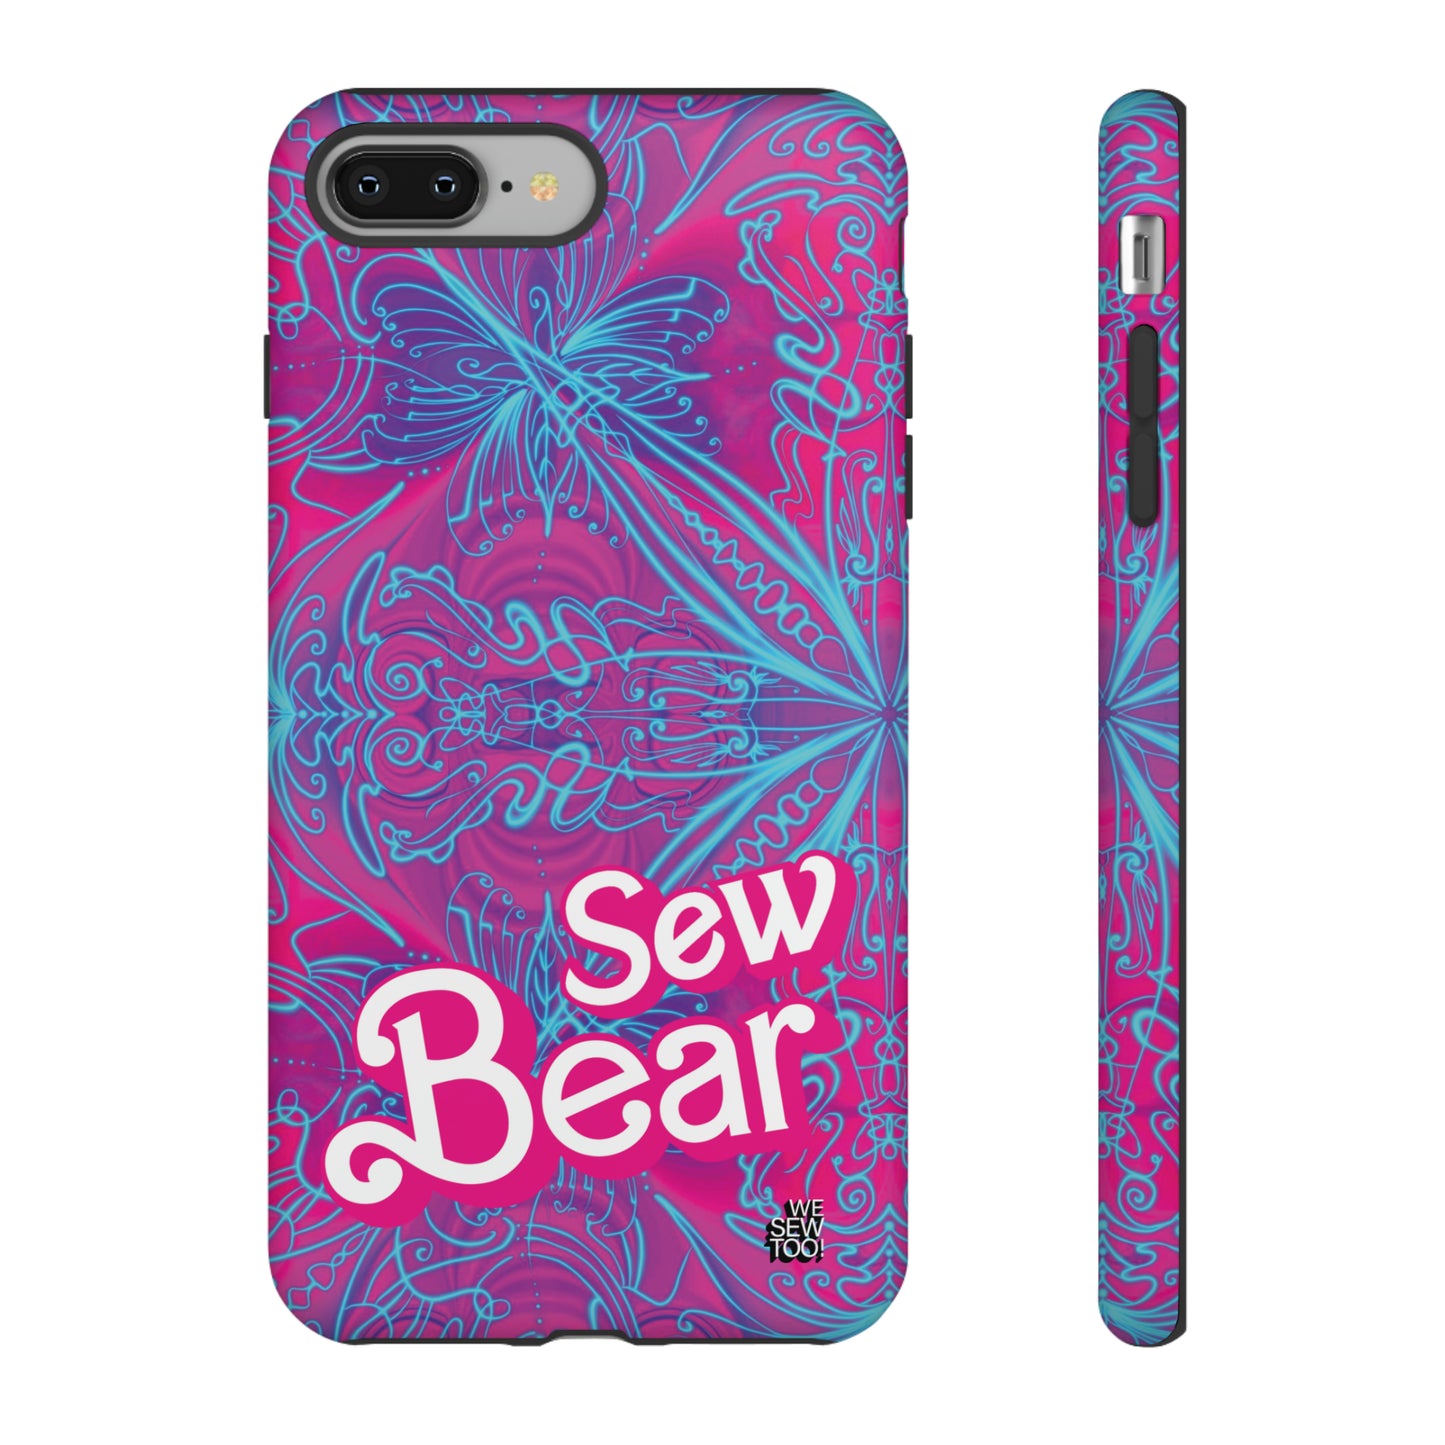 Sew Bear Tough phone case